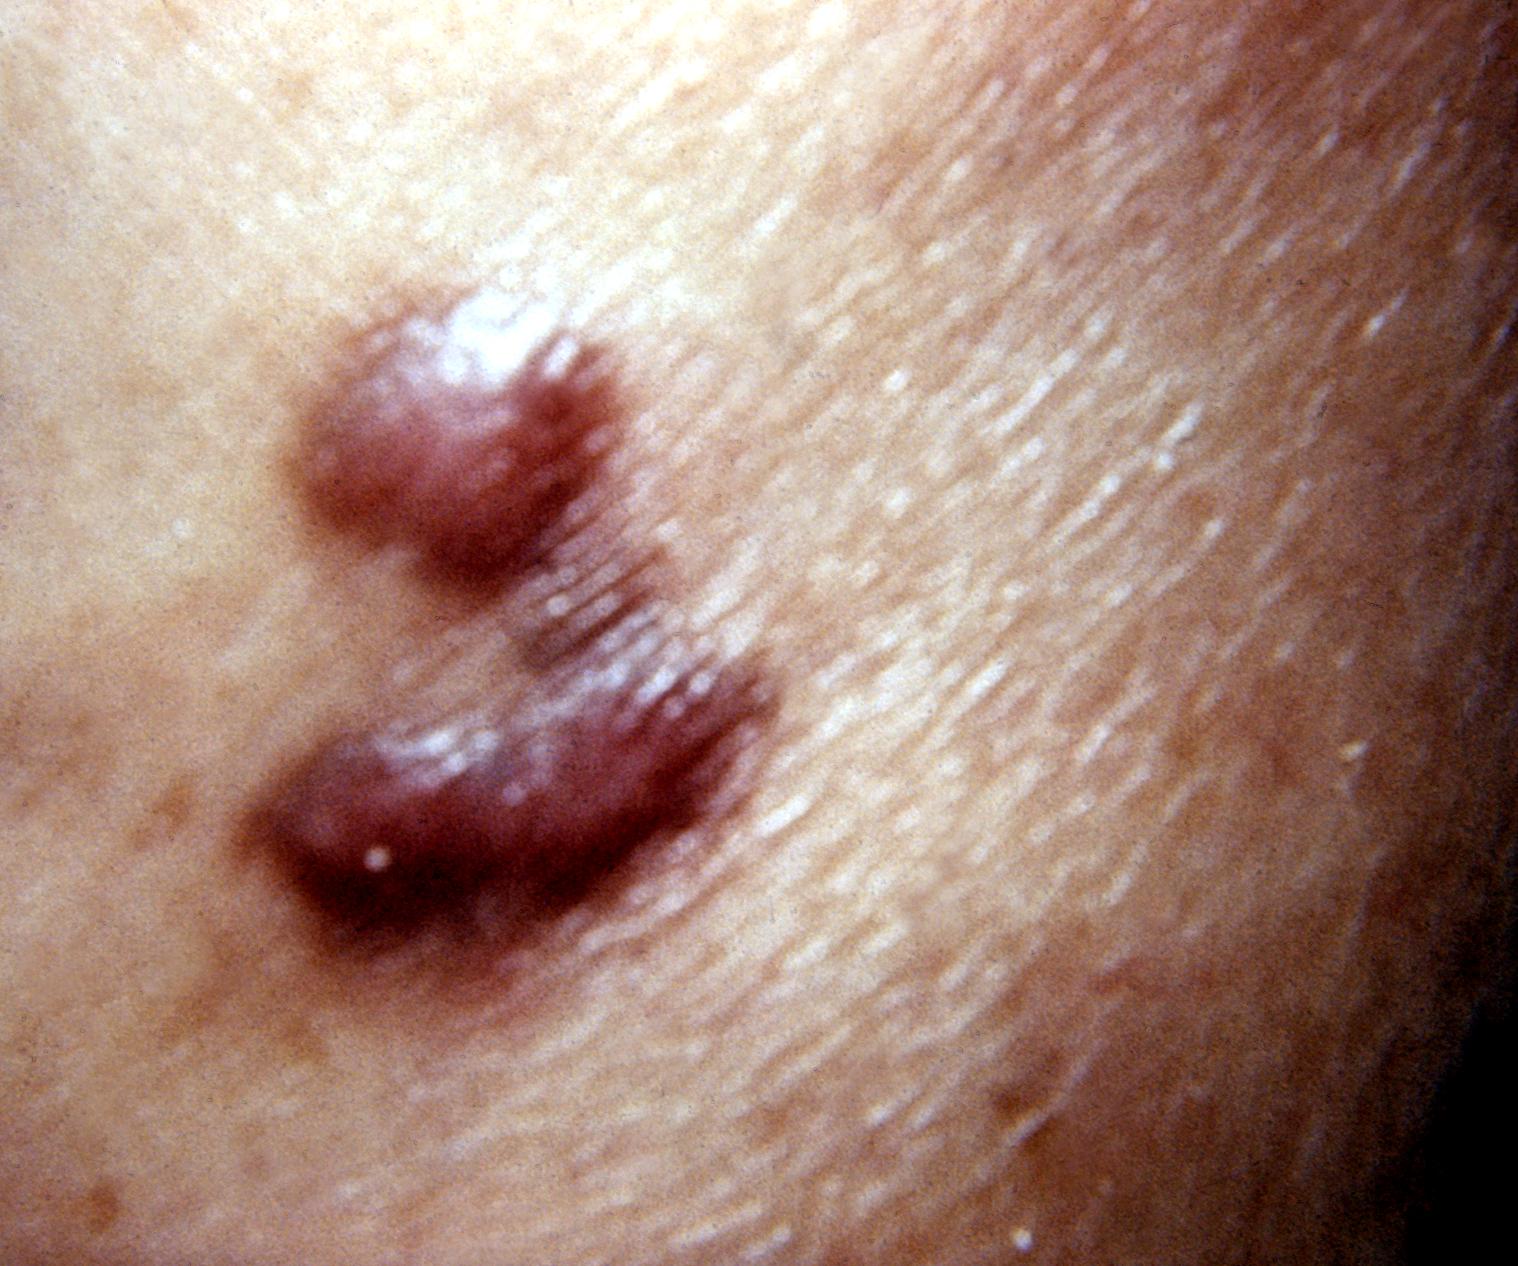 Kpaosi sarcoma lesion Source: Wikimedia Commons.[16]